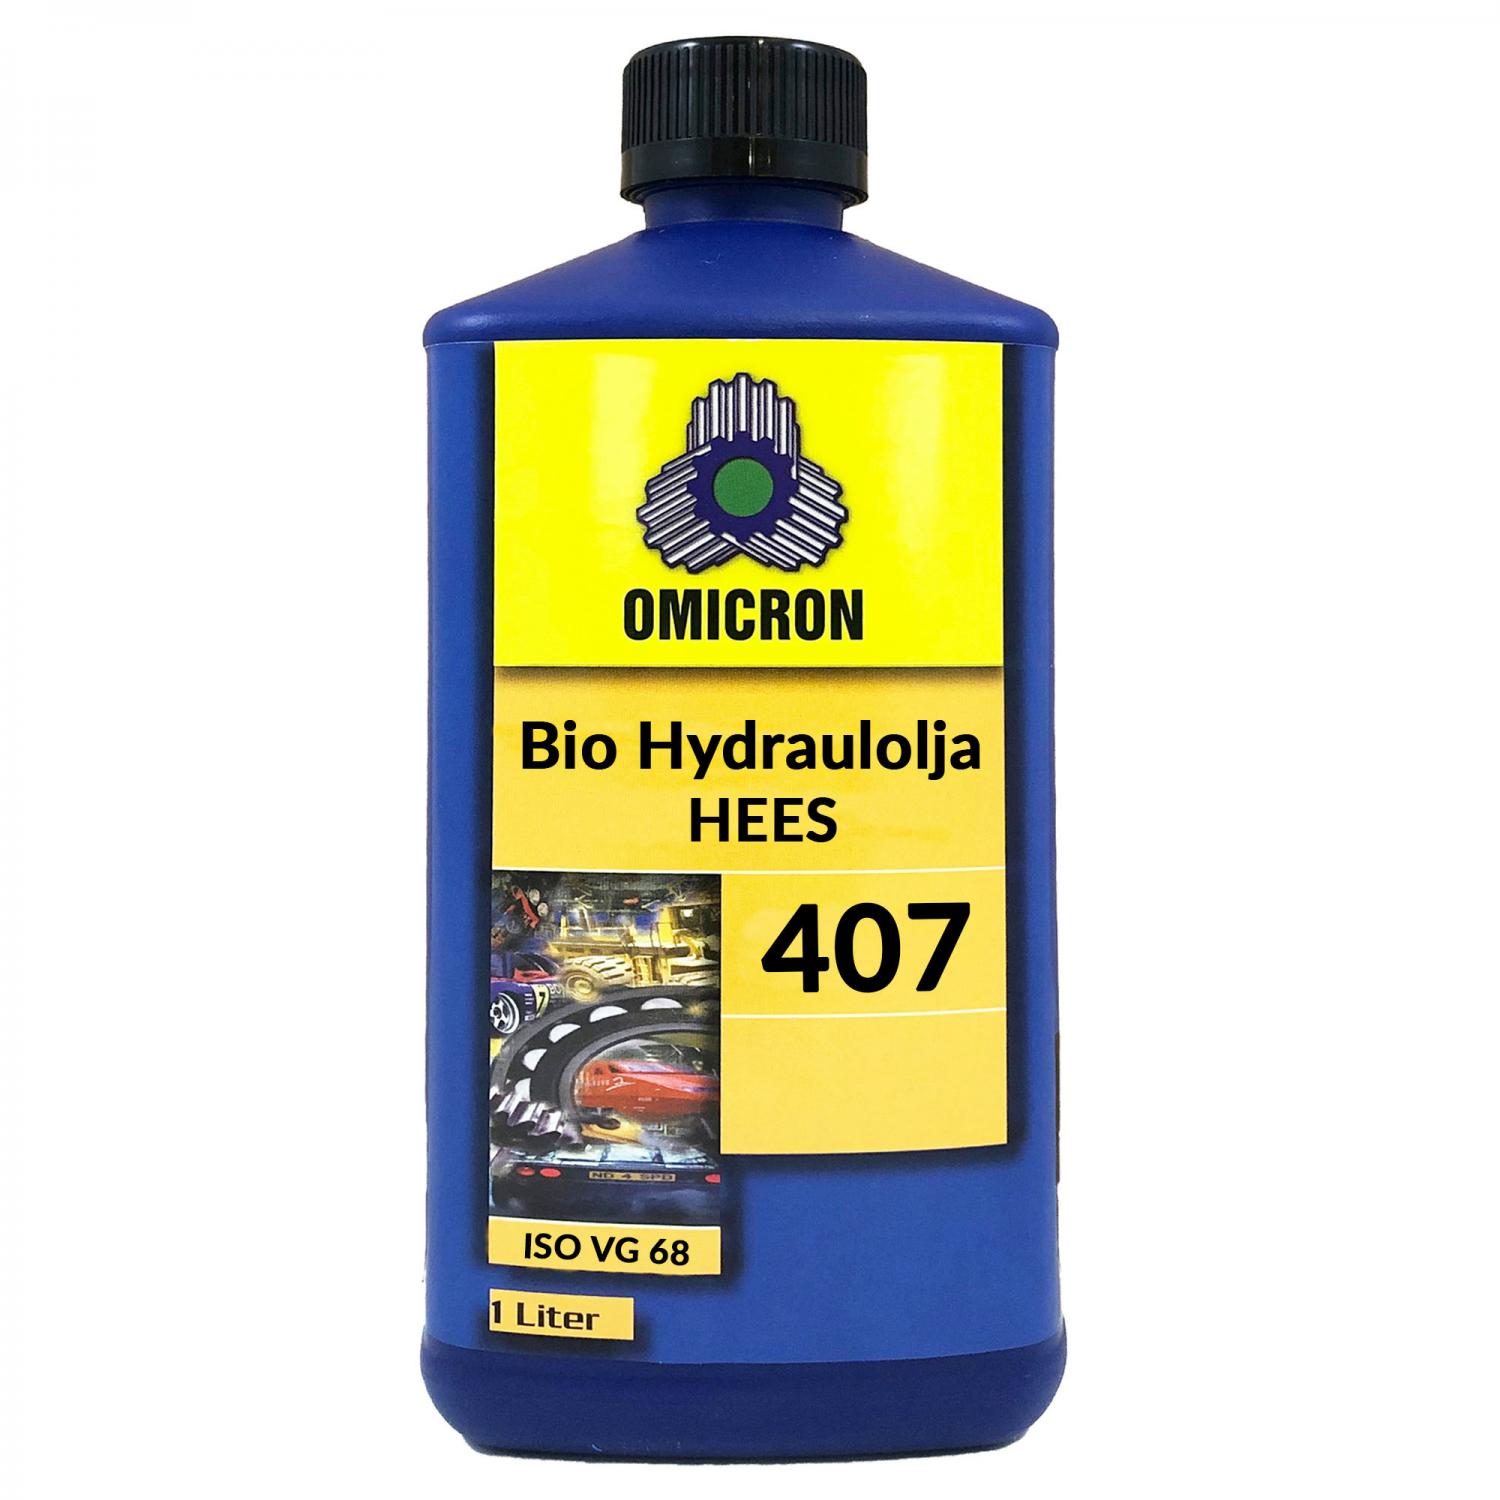 Omicron 407 BIO Hydraulolja HEES / ISO VG 68